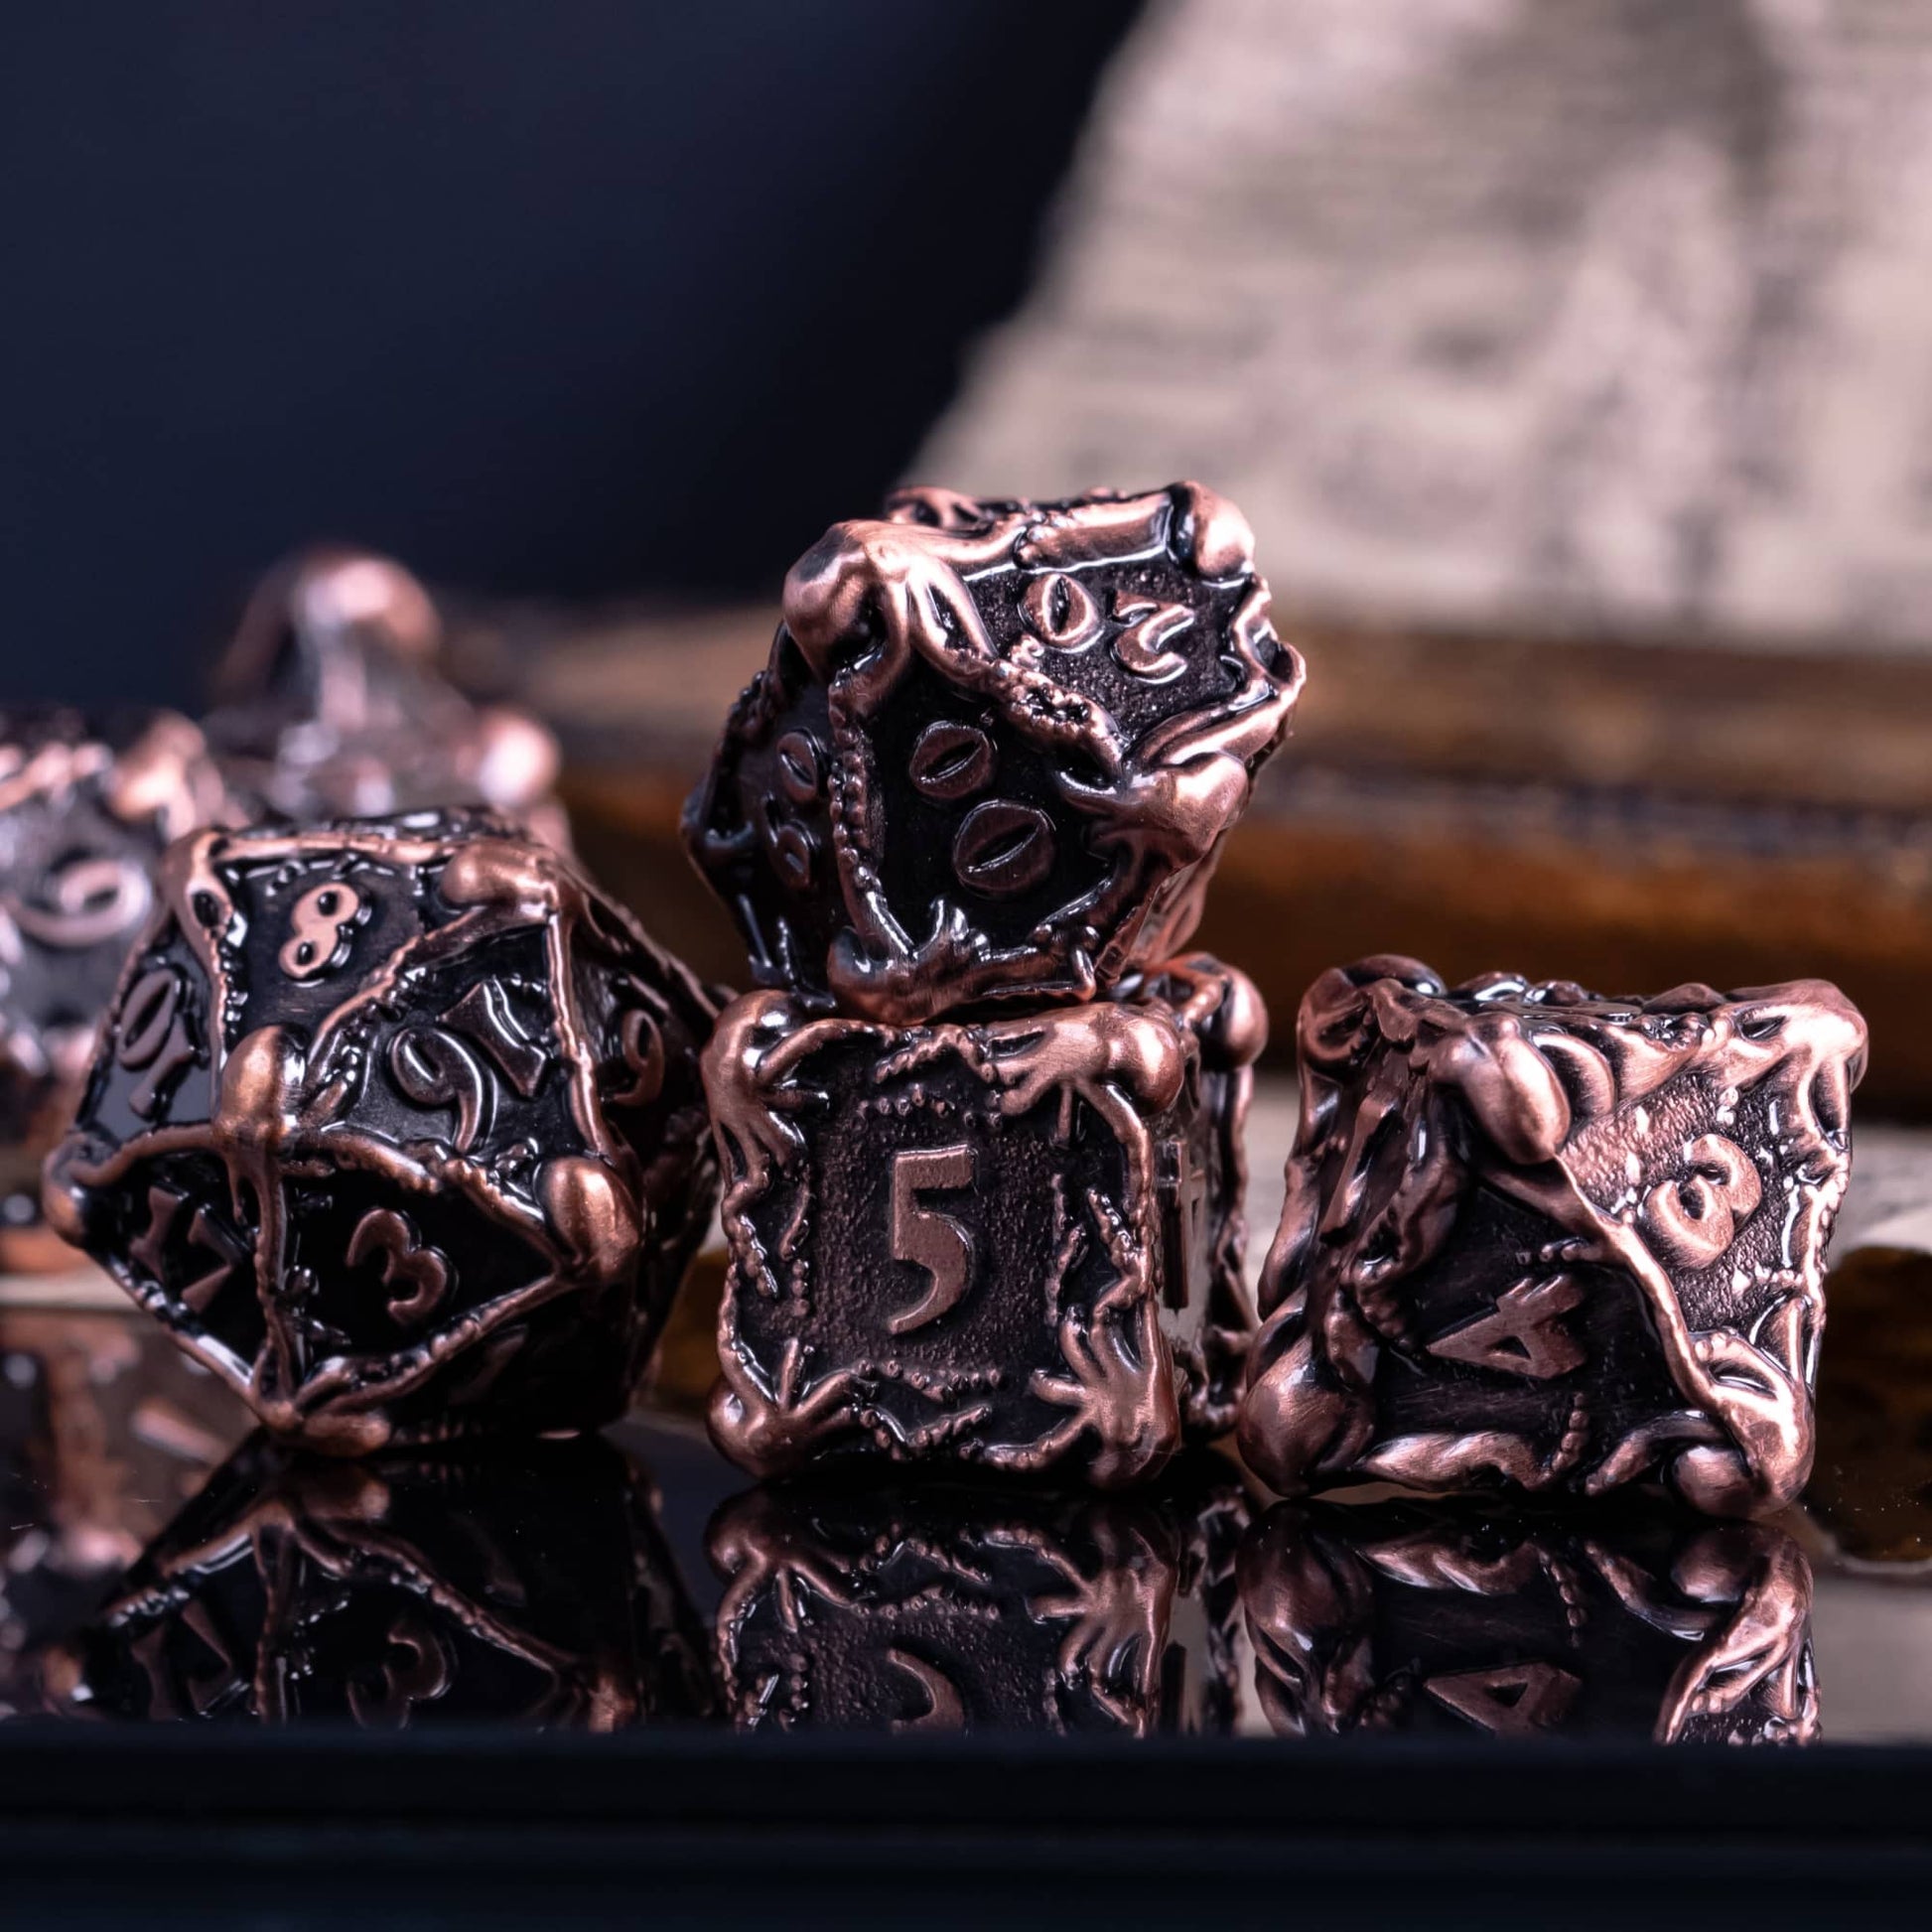 Dark metal octopus dice with blurry background